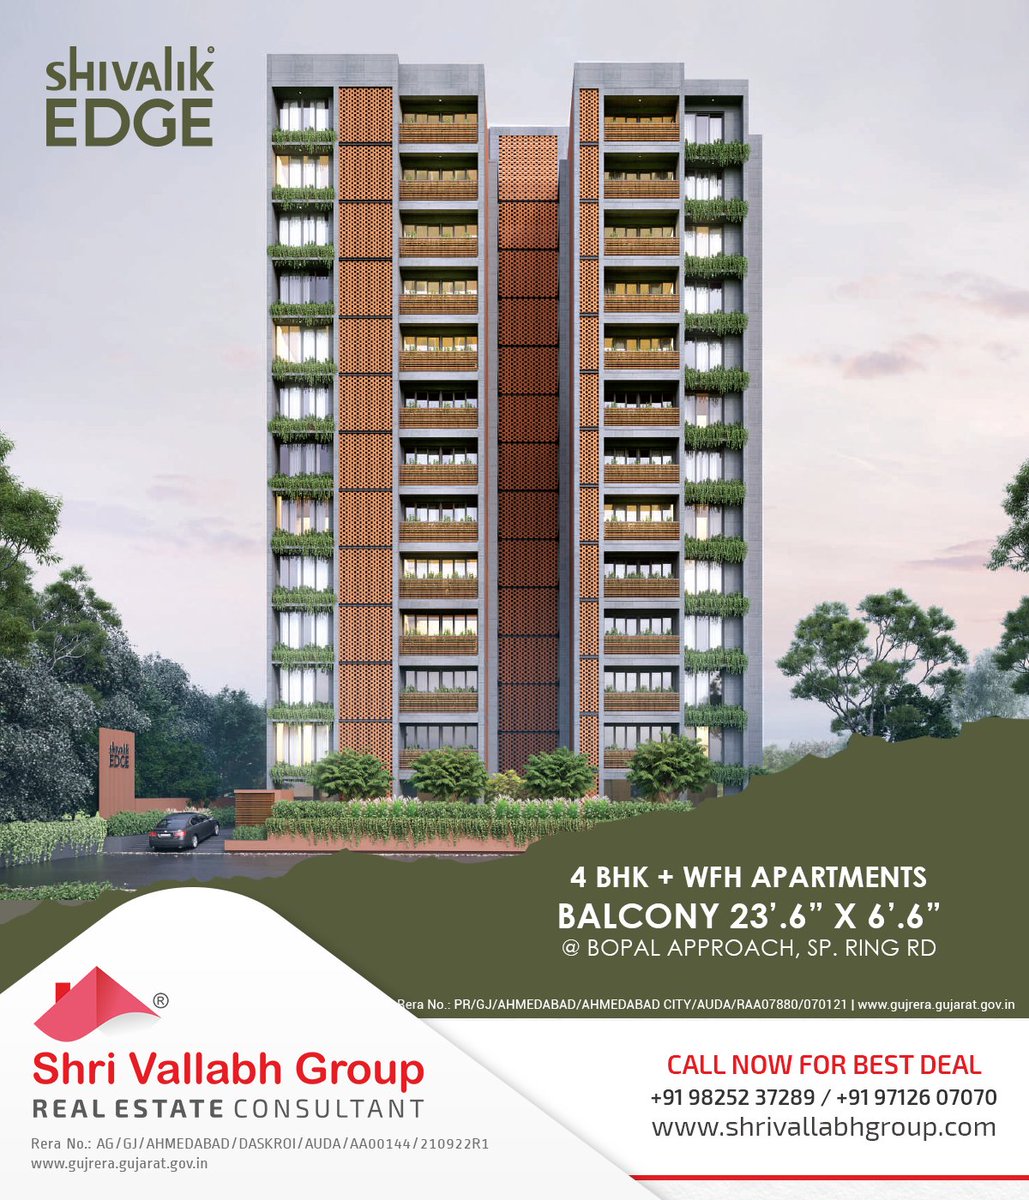 Home you have always been looking!

Shivalik Edge 4 BHK + WFH APARTMENTS
Location: Ambli | Sqft:4287

Offers Personal foyer, elevator, servant room & 2 balconies

Call: 9825237289
#ShriVallabhGroup #RealEstateInAhmedabad #Bopal #Ambli #ShivalikEdge #Penthouses #SpaciousApartments